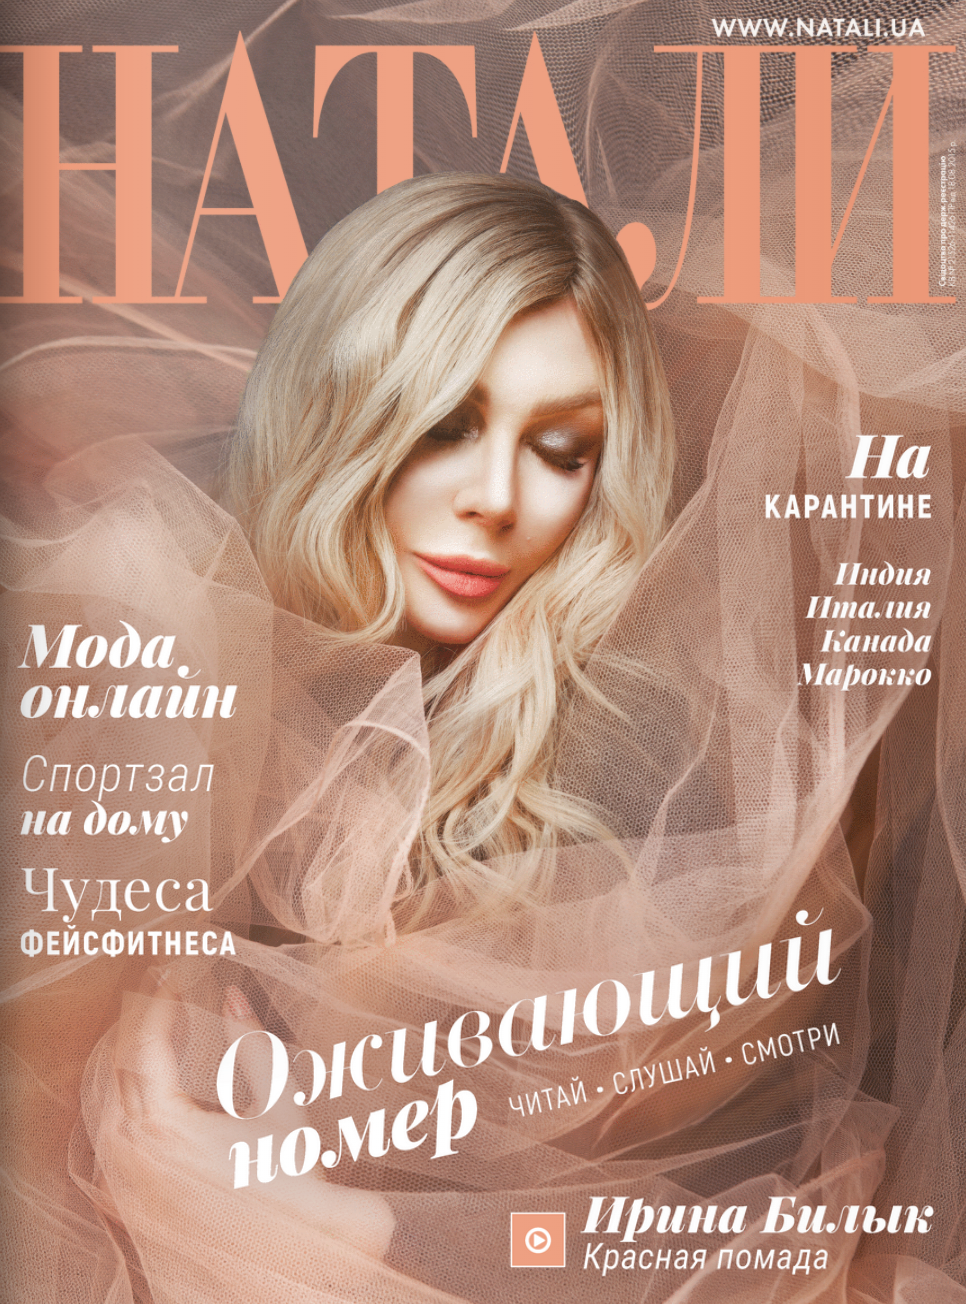 Ірина Білик на обкладинці журналу "Наталі"